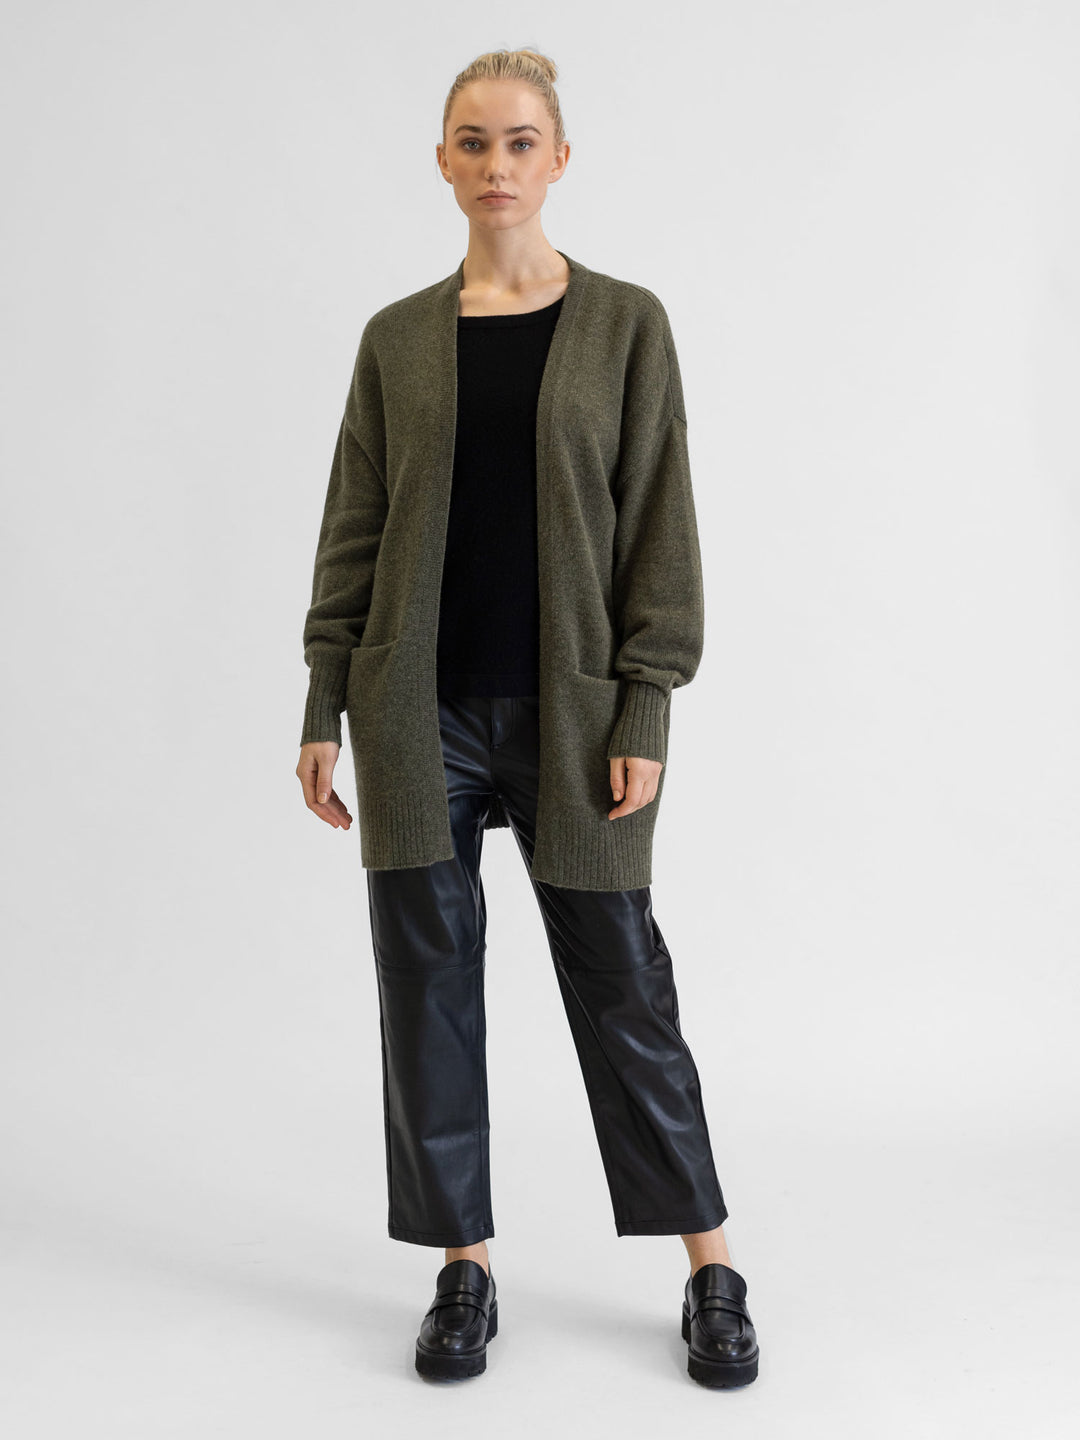 Cashmere cardigan "Lounge" Army green, in 100% cashmere. Scandinavian design by Kashmina